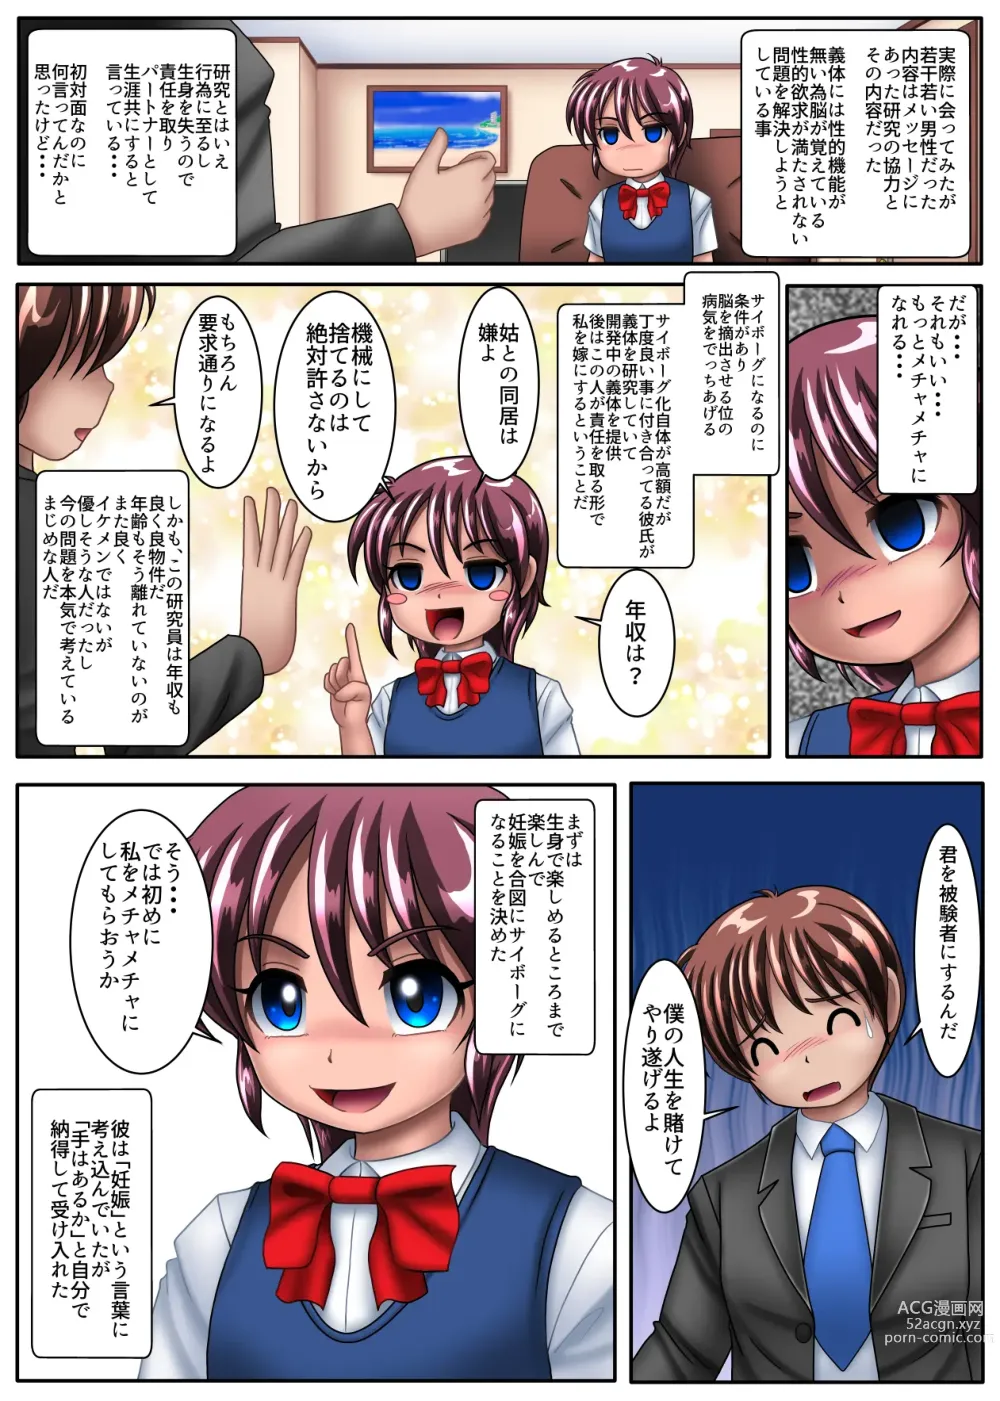 Page 4 of doujinshi Misaki-chan of Dropout